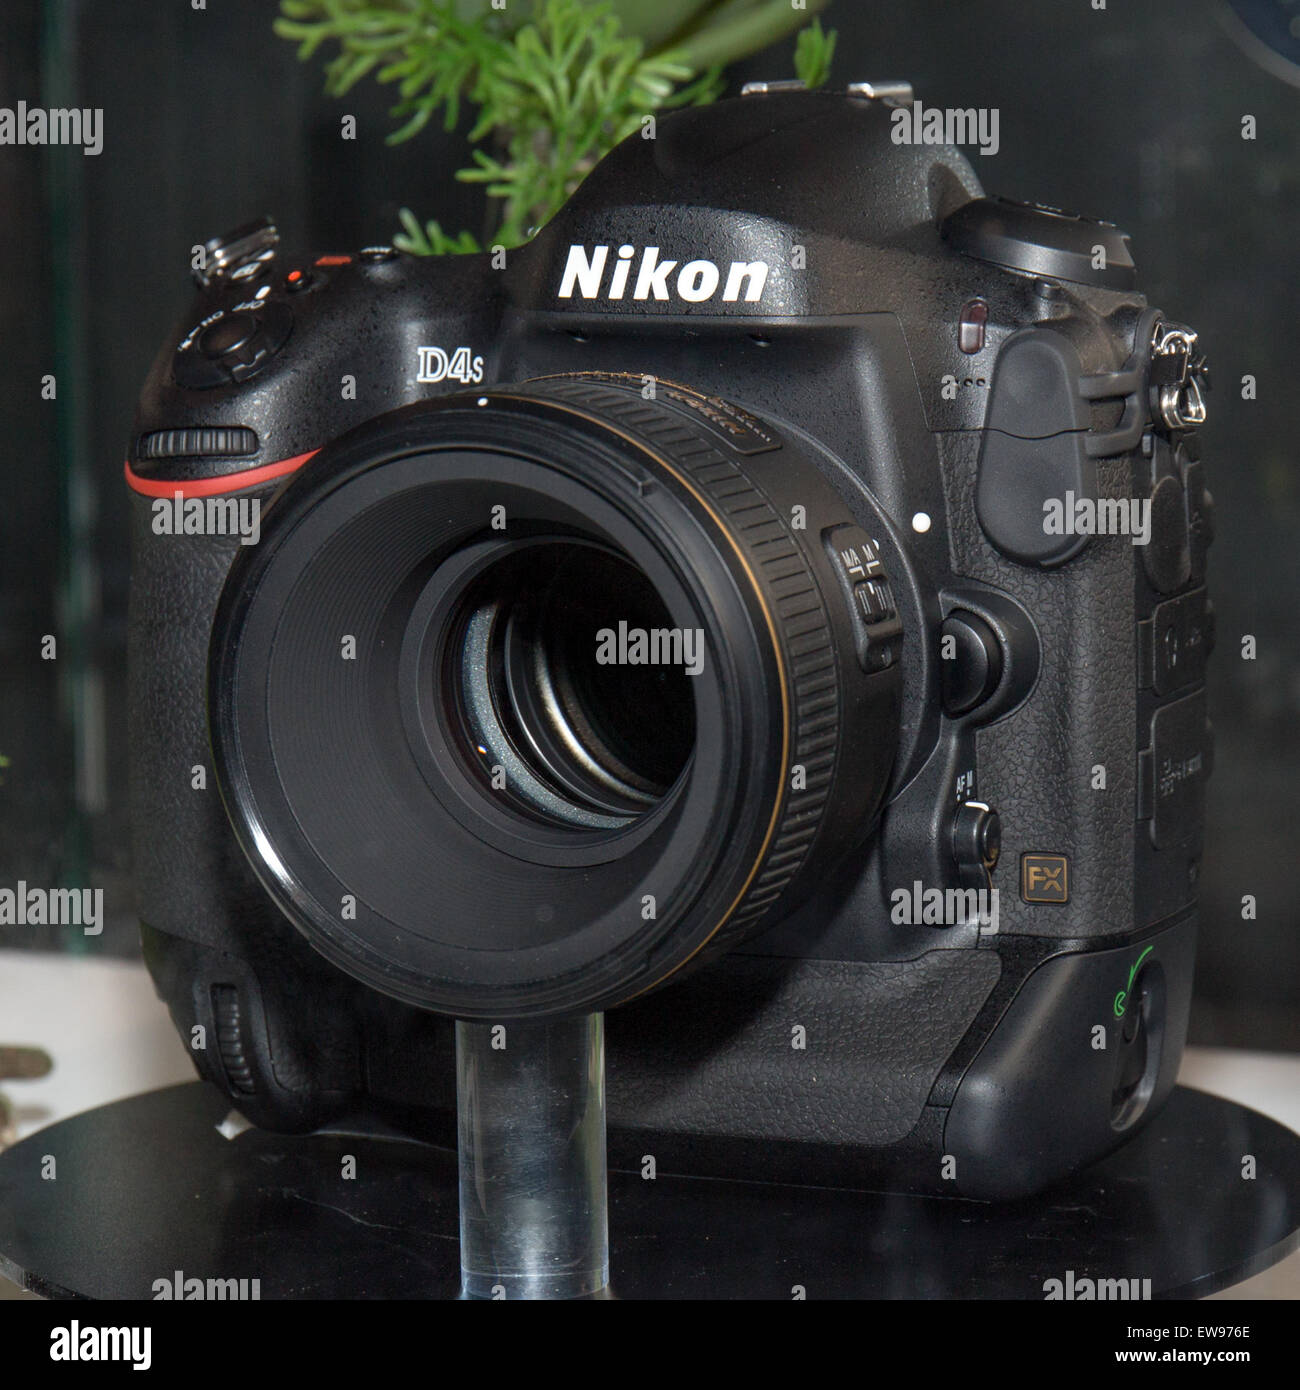 Nikon D4s (prototype) 2014 CP Stock Photo